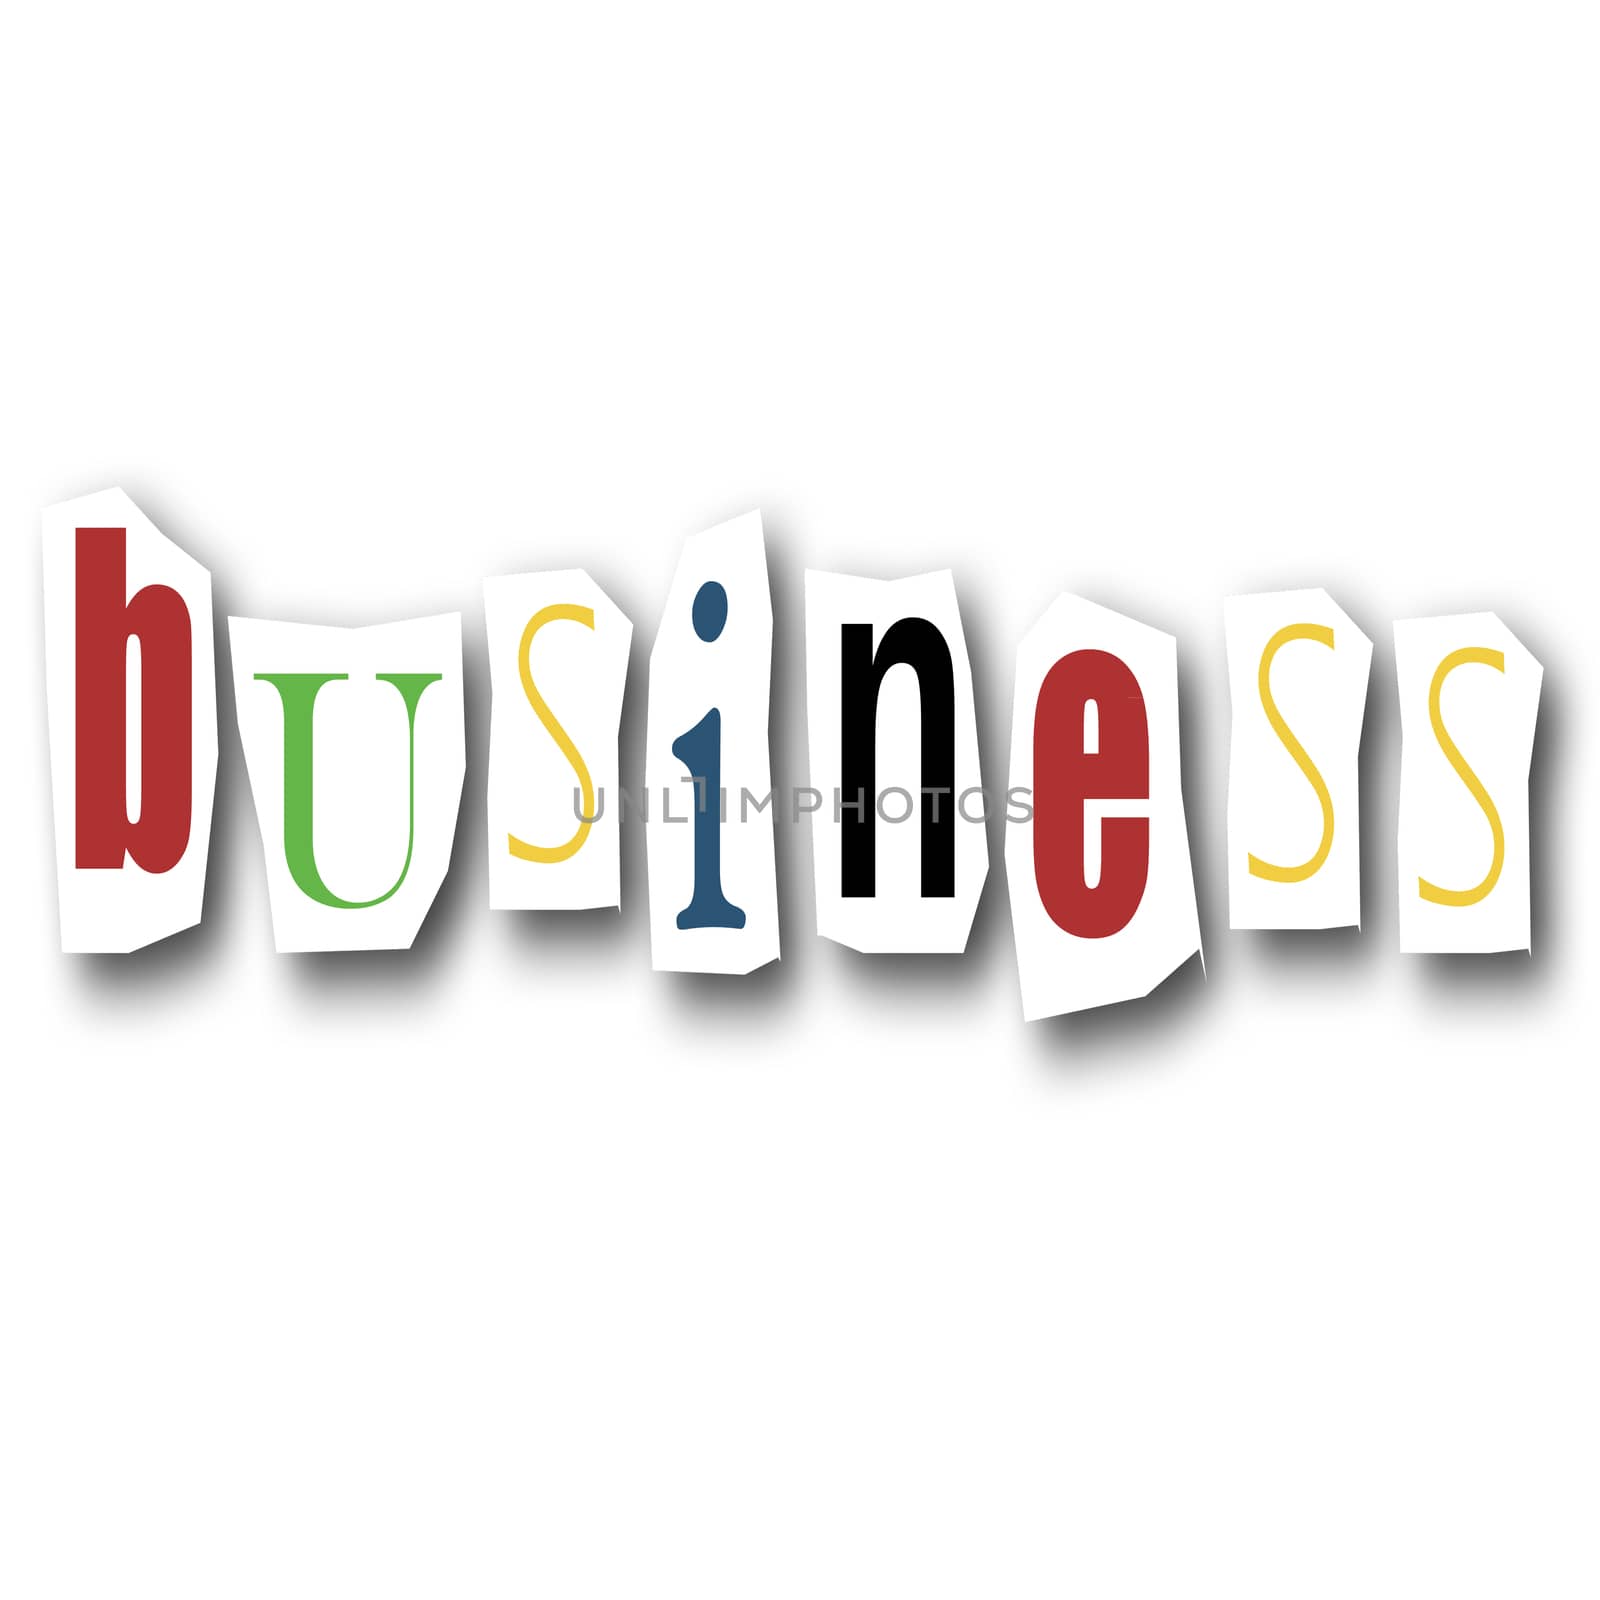 business by NeydtStock